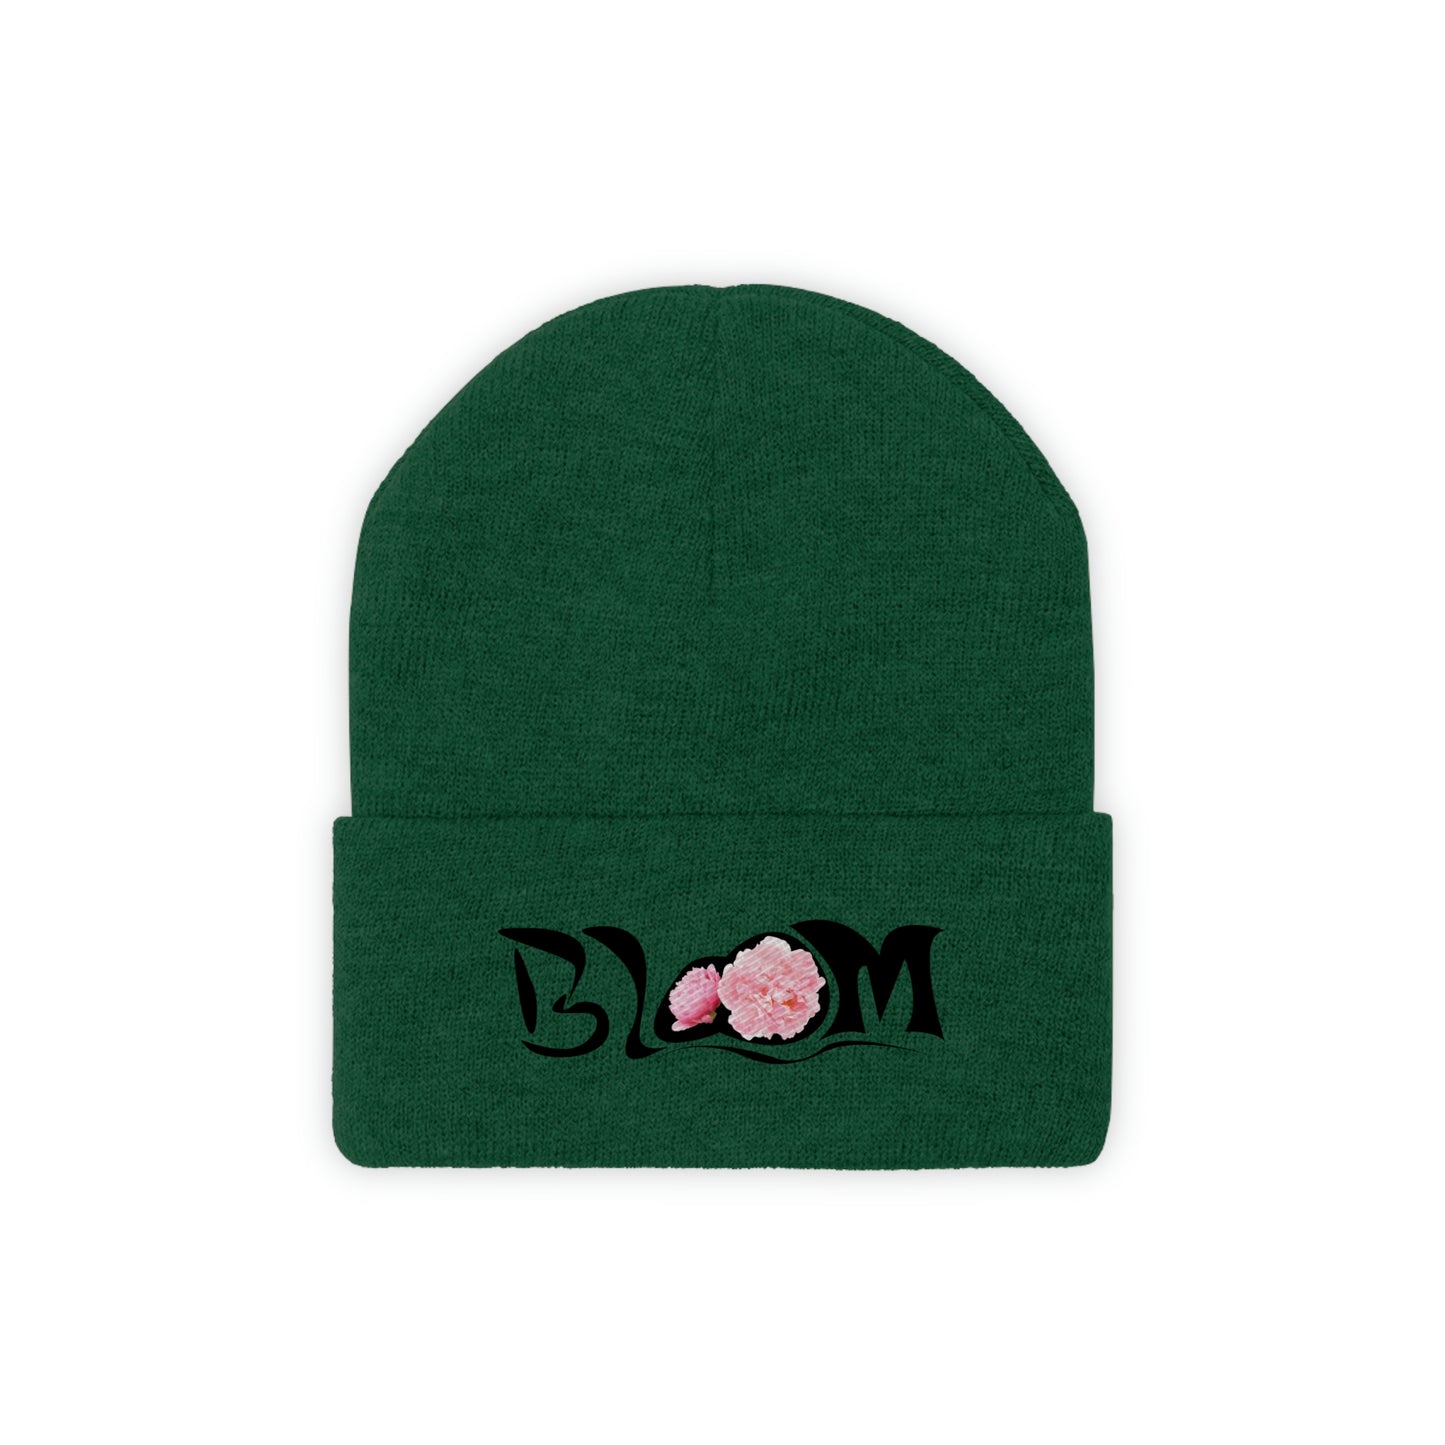 "Bloom" Knit Beanie